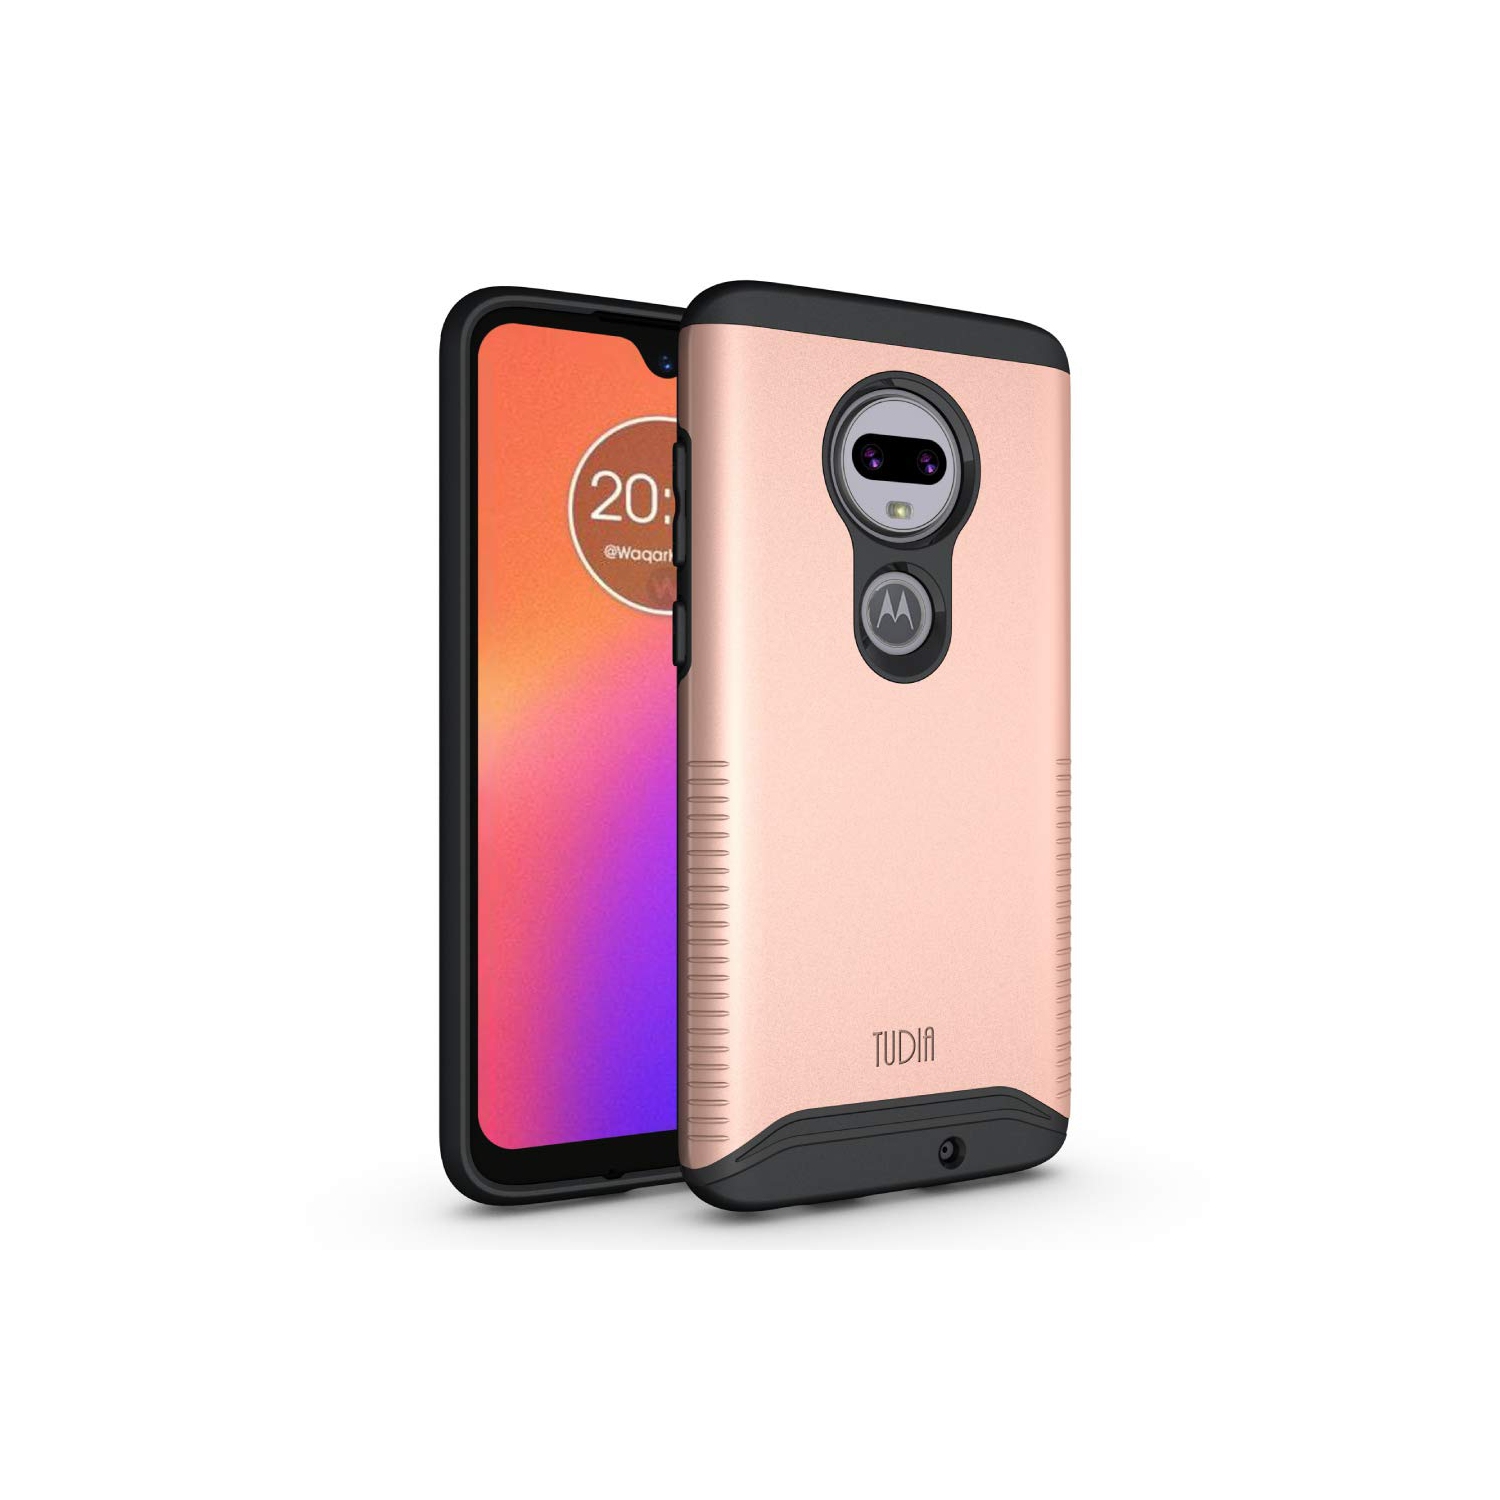 TUDIA Slim-Fit [Merge] Dual Layer Extreme Drop Protection/Rugged Phone Case for Motorola Moto G7/G7 Plus (Rose Gold)